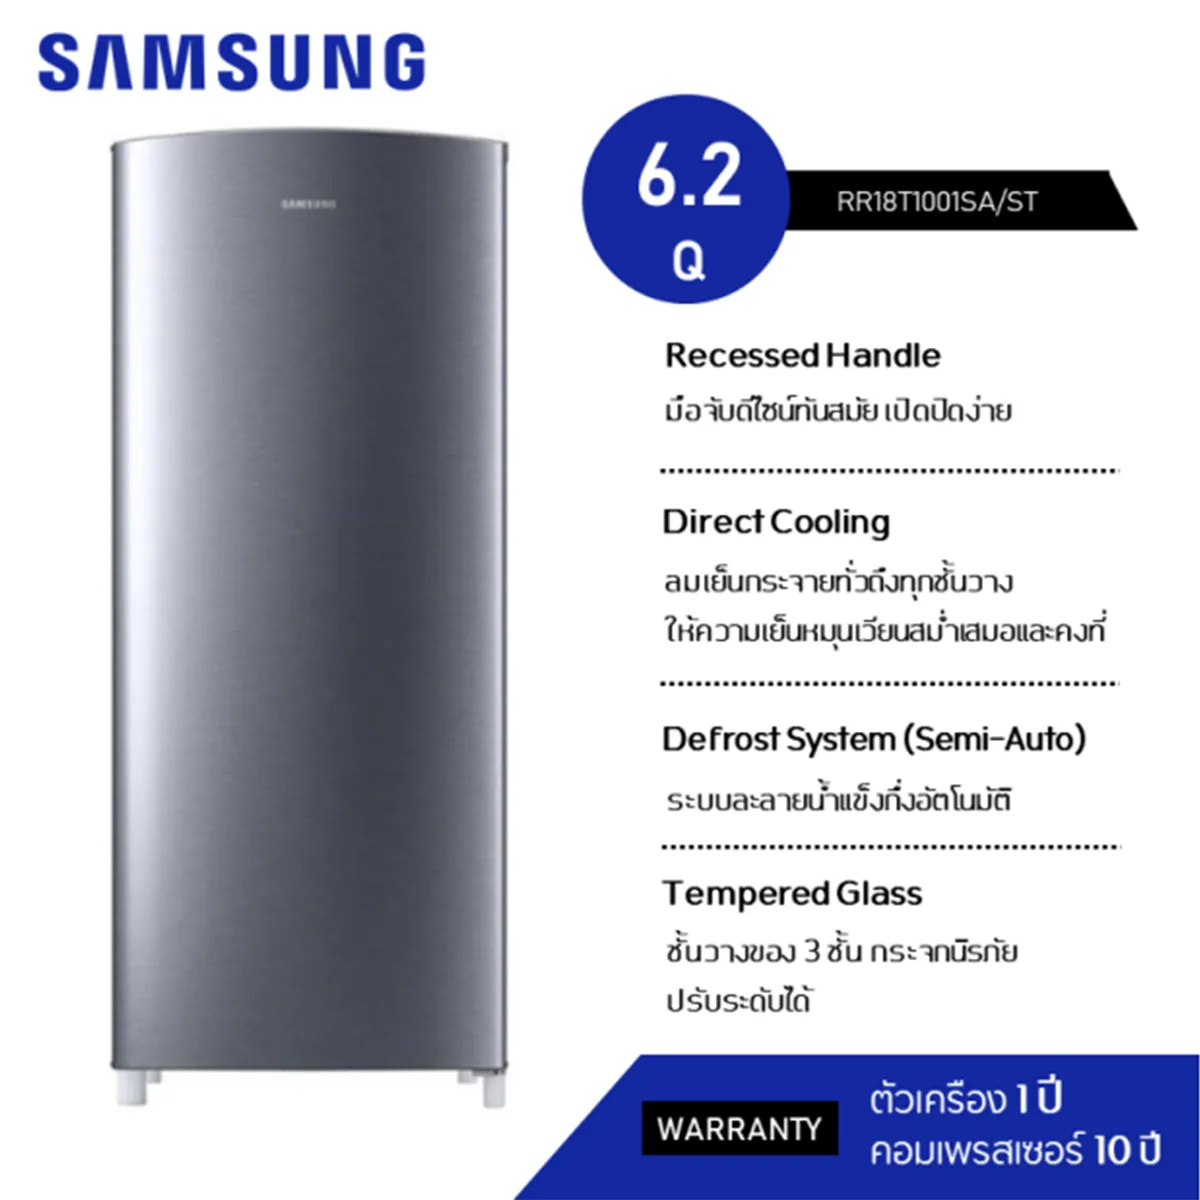 SAMSUNG ตู้เย็น 1 ประตู ความจุ 6.2 คิว รุ่น RR18T1001SA/ST mini bar ใหญ่ แช่แข็งได้ 